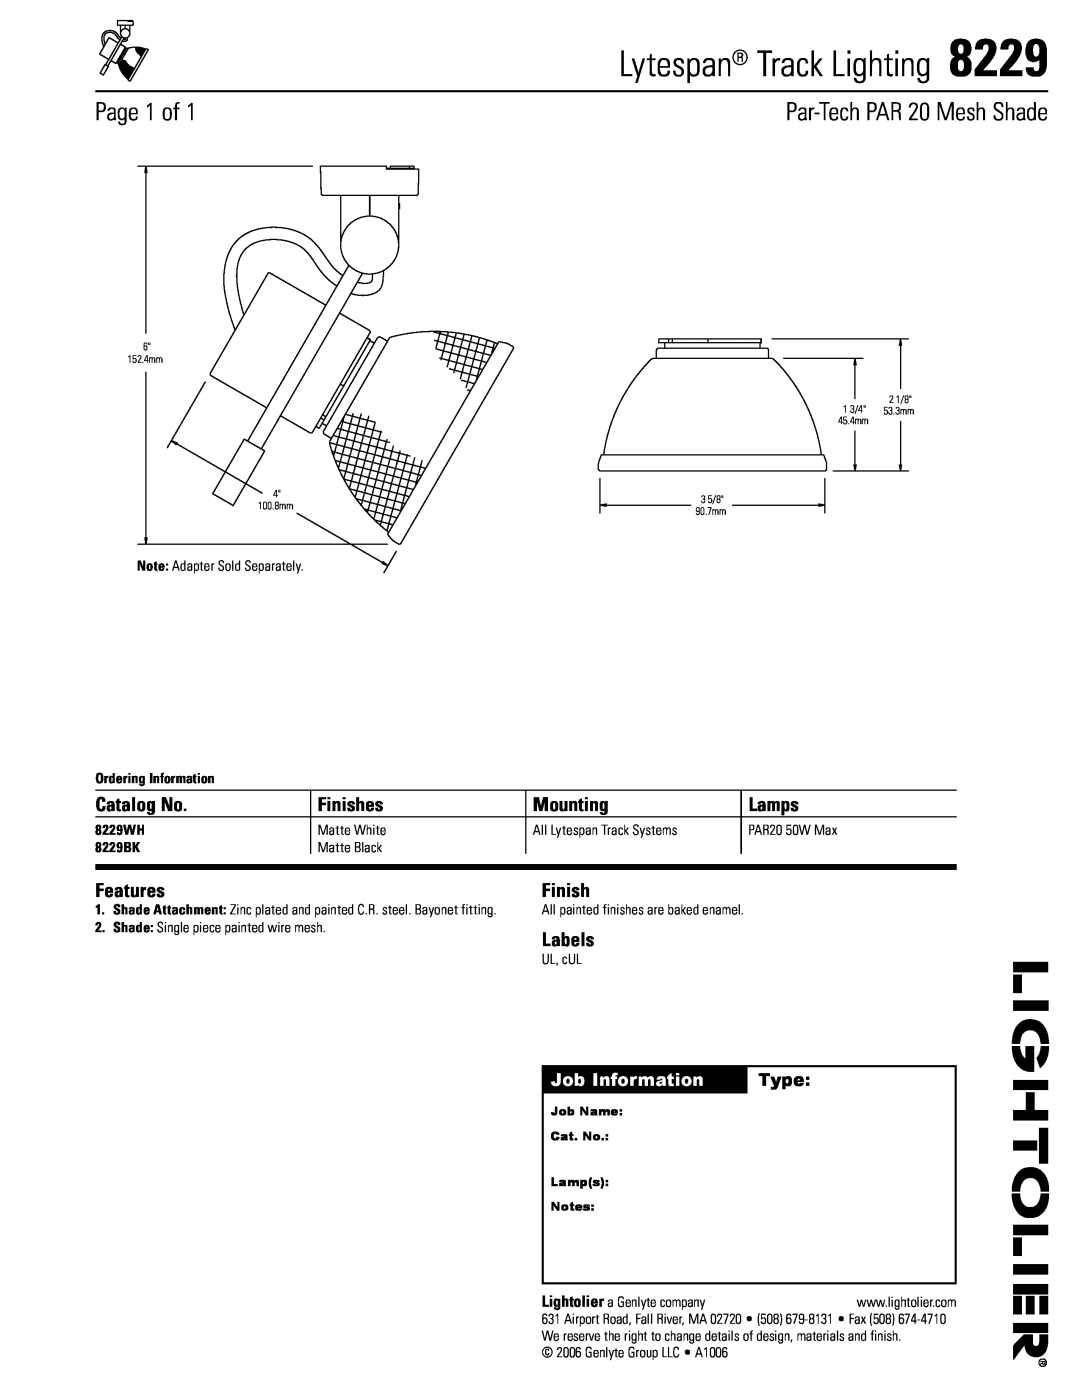 Lightolier 8229 manual Lytespan Track Lighting, Page of, Par-TechPAR 20 Mesh Shade, Catalog No, Finishes, Mounting, Lamps 